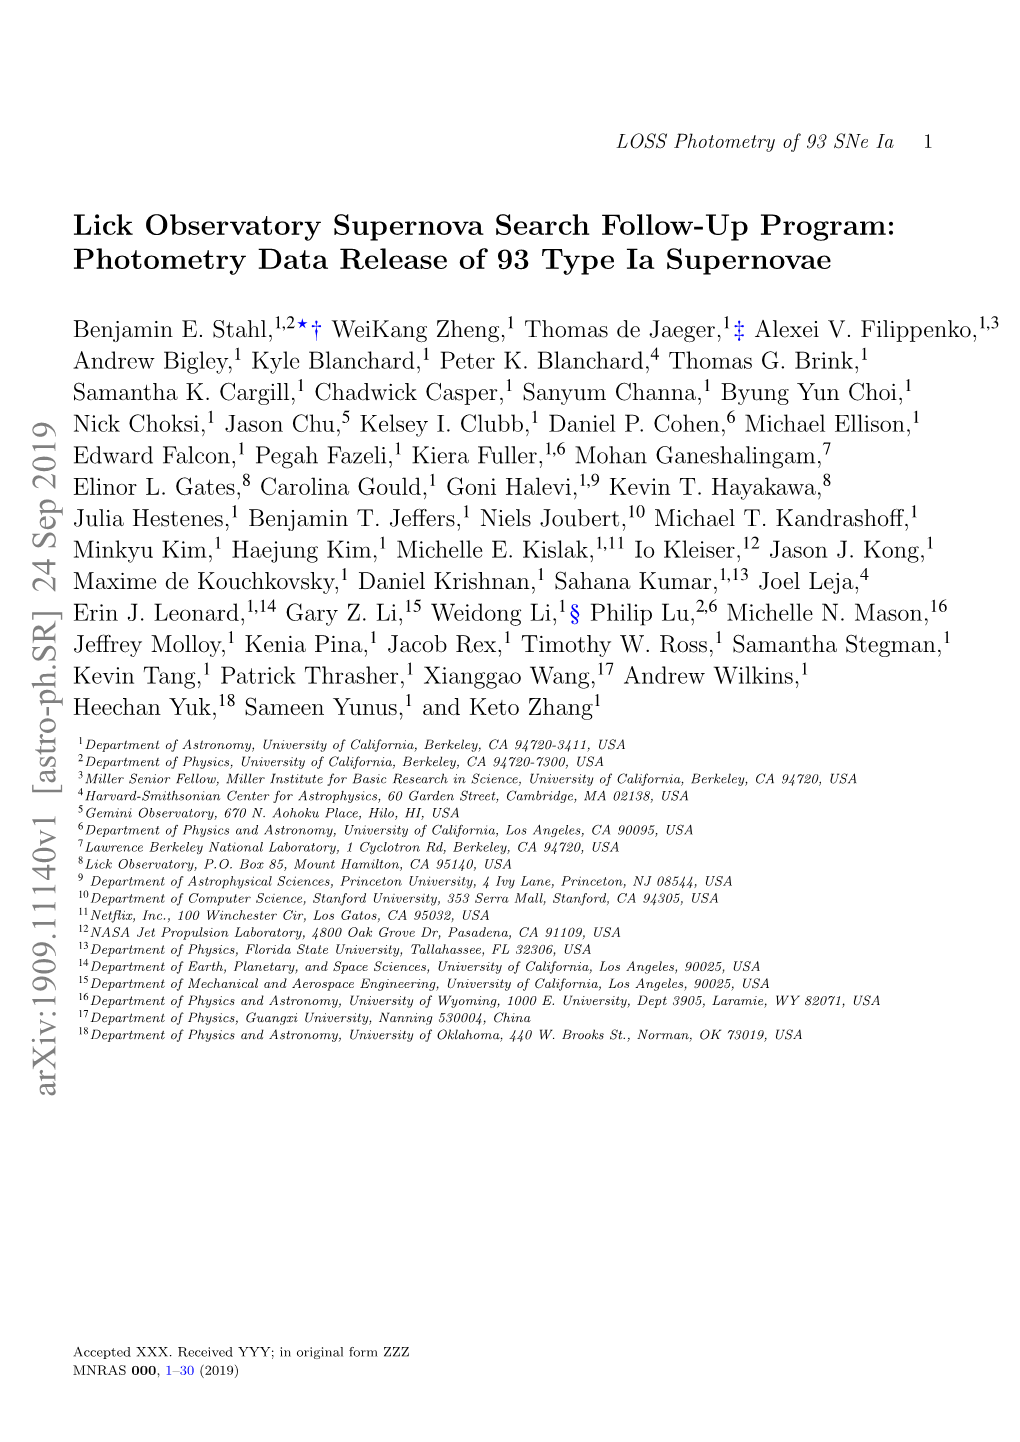 Lick Observatory Supernova Search Follow-Up Program: Photometry Data Release of 93 Type Ia Supernovae